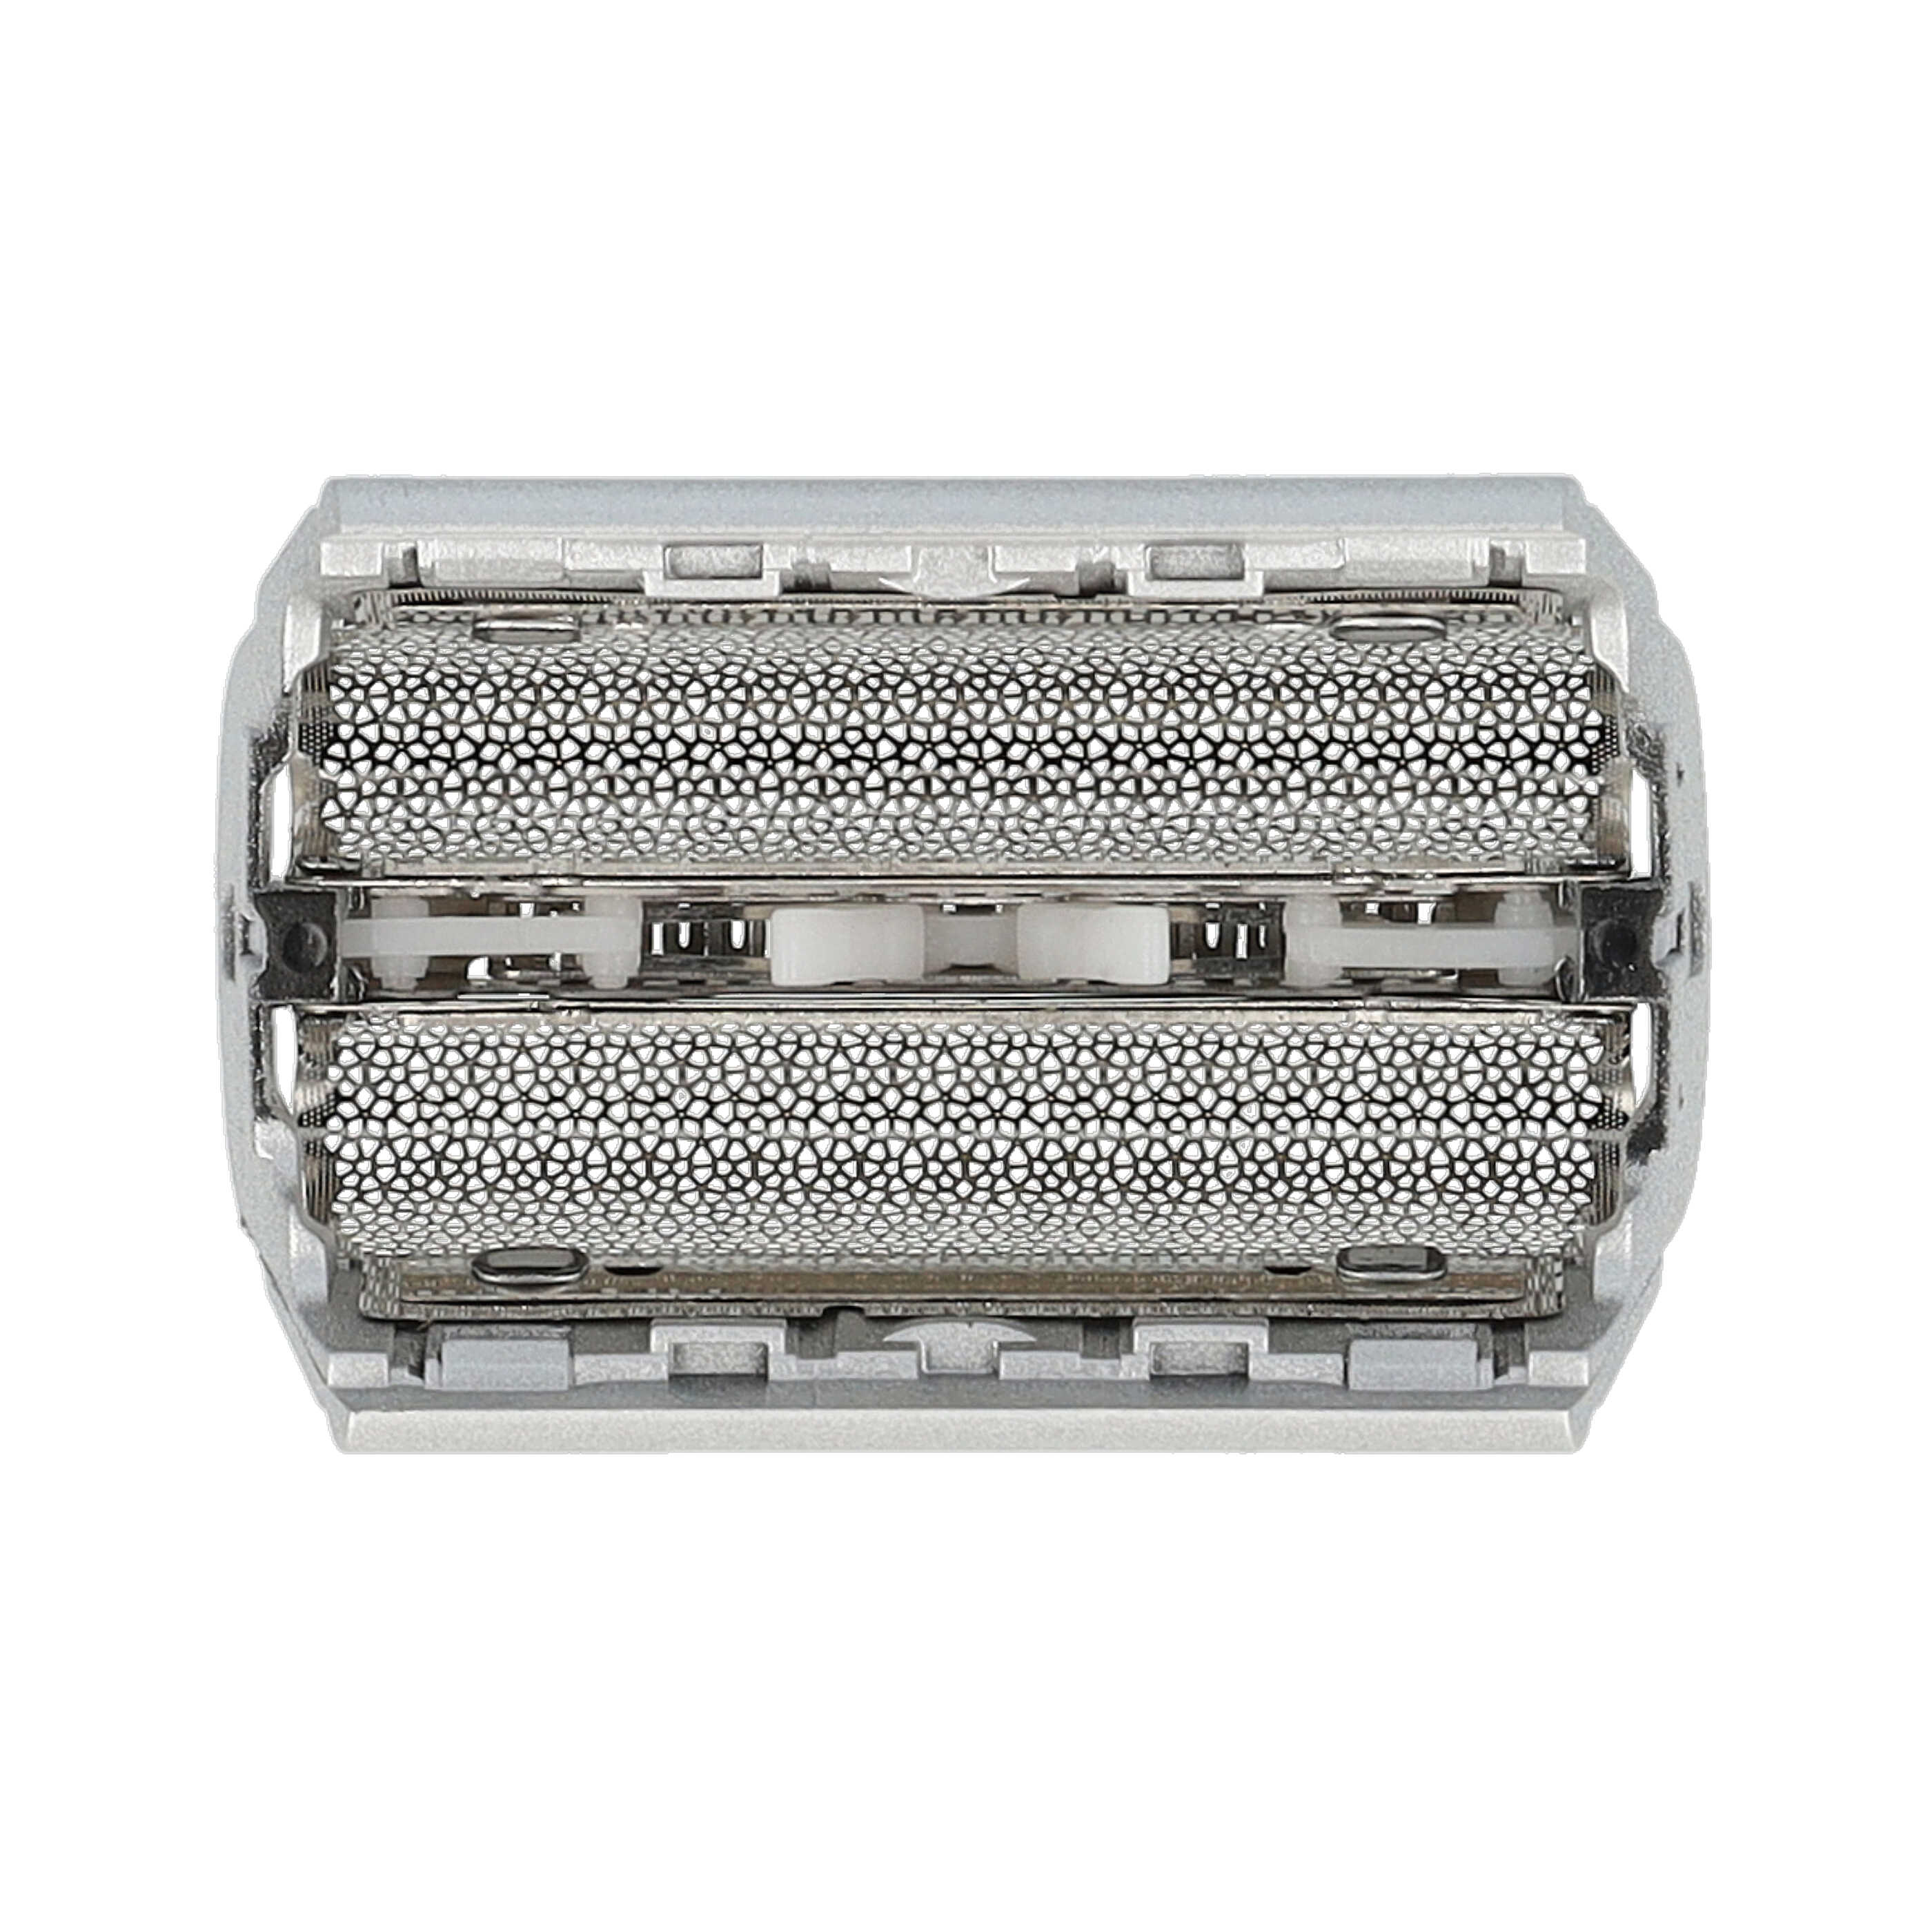 Pack piezas corte reemplaza Braun SB505, 31B, 31S para afeitadoras Braun - lámina + bloque, negro/plata